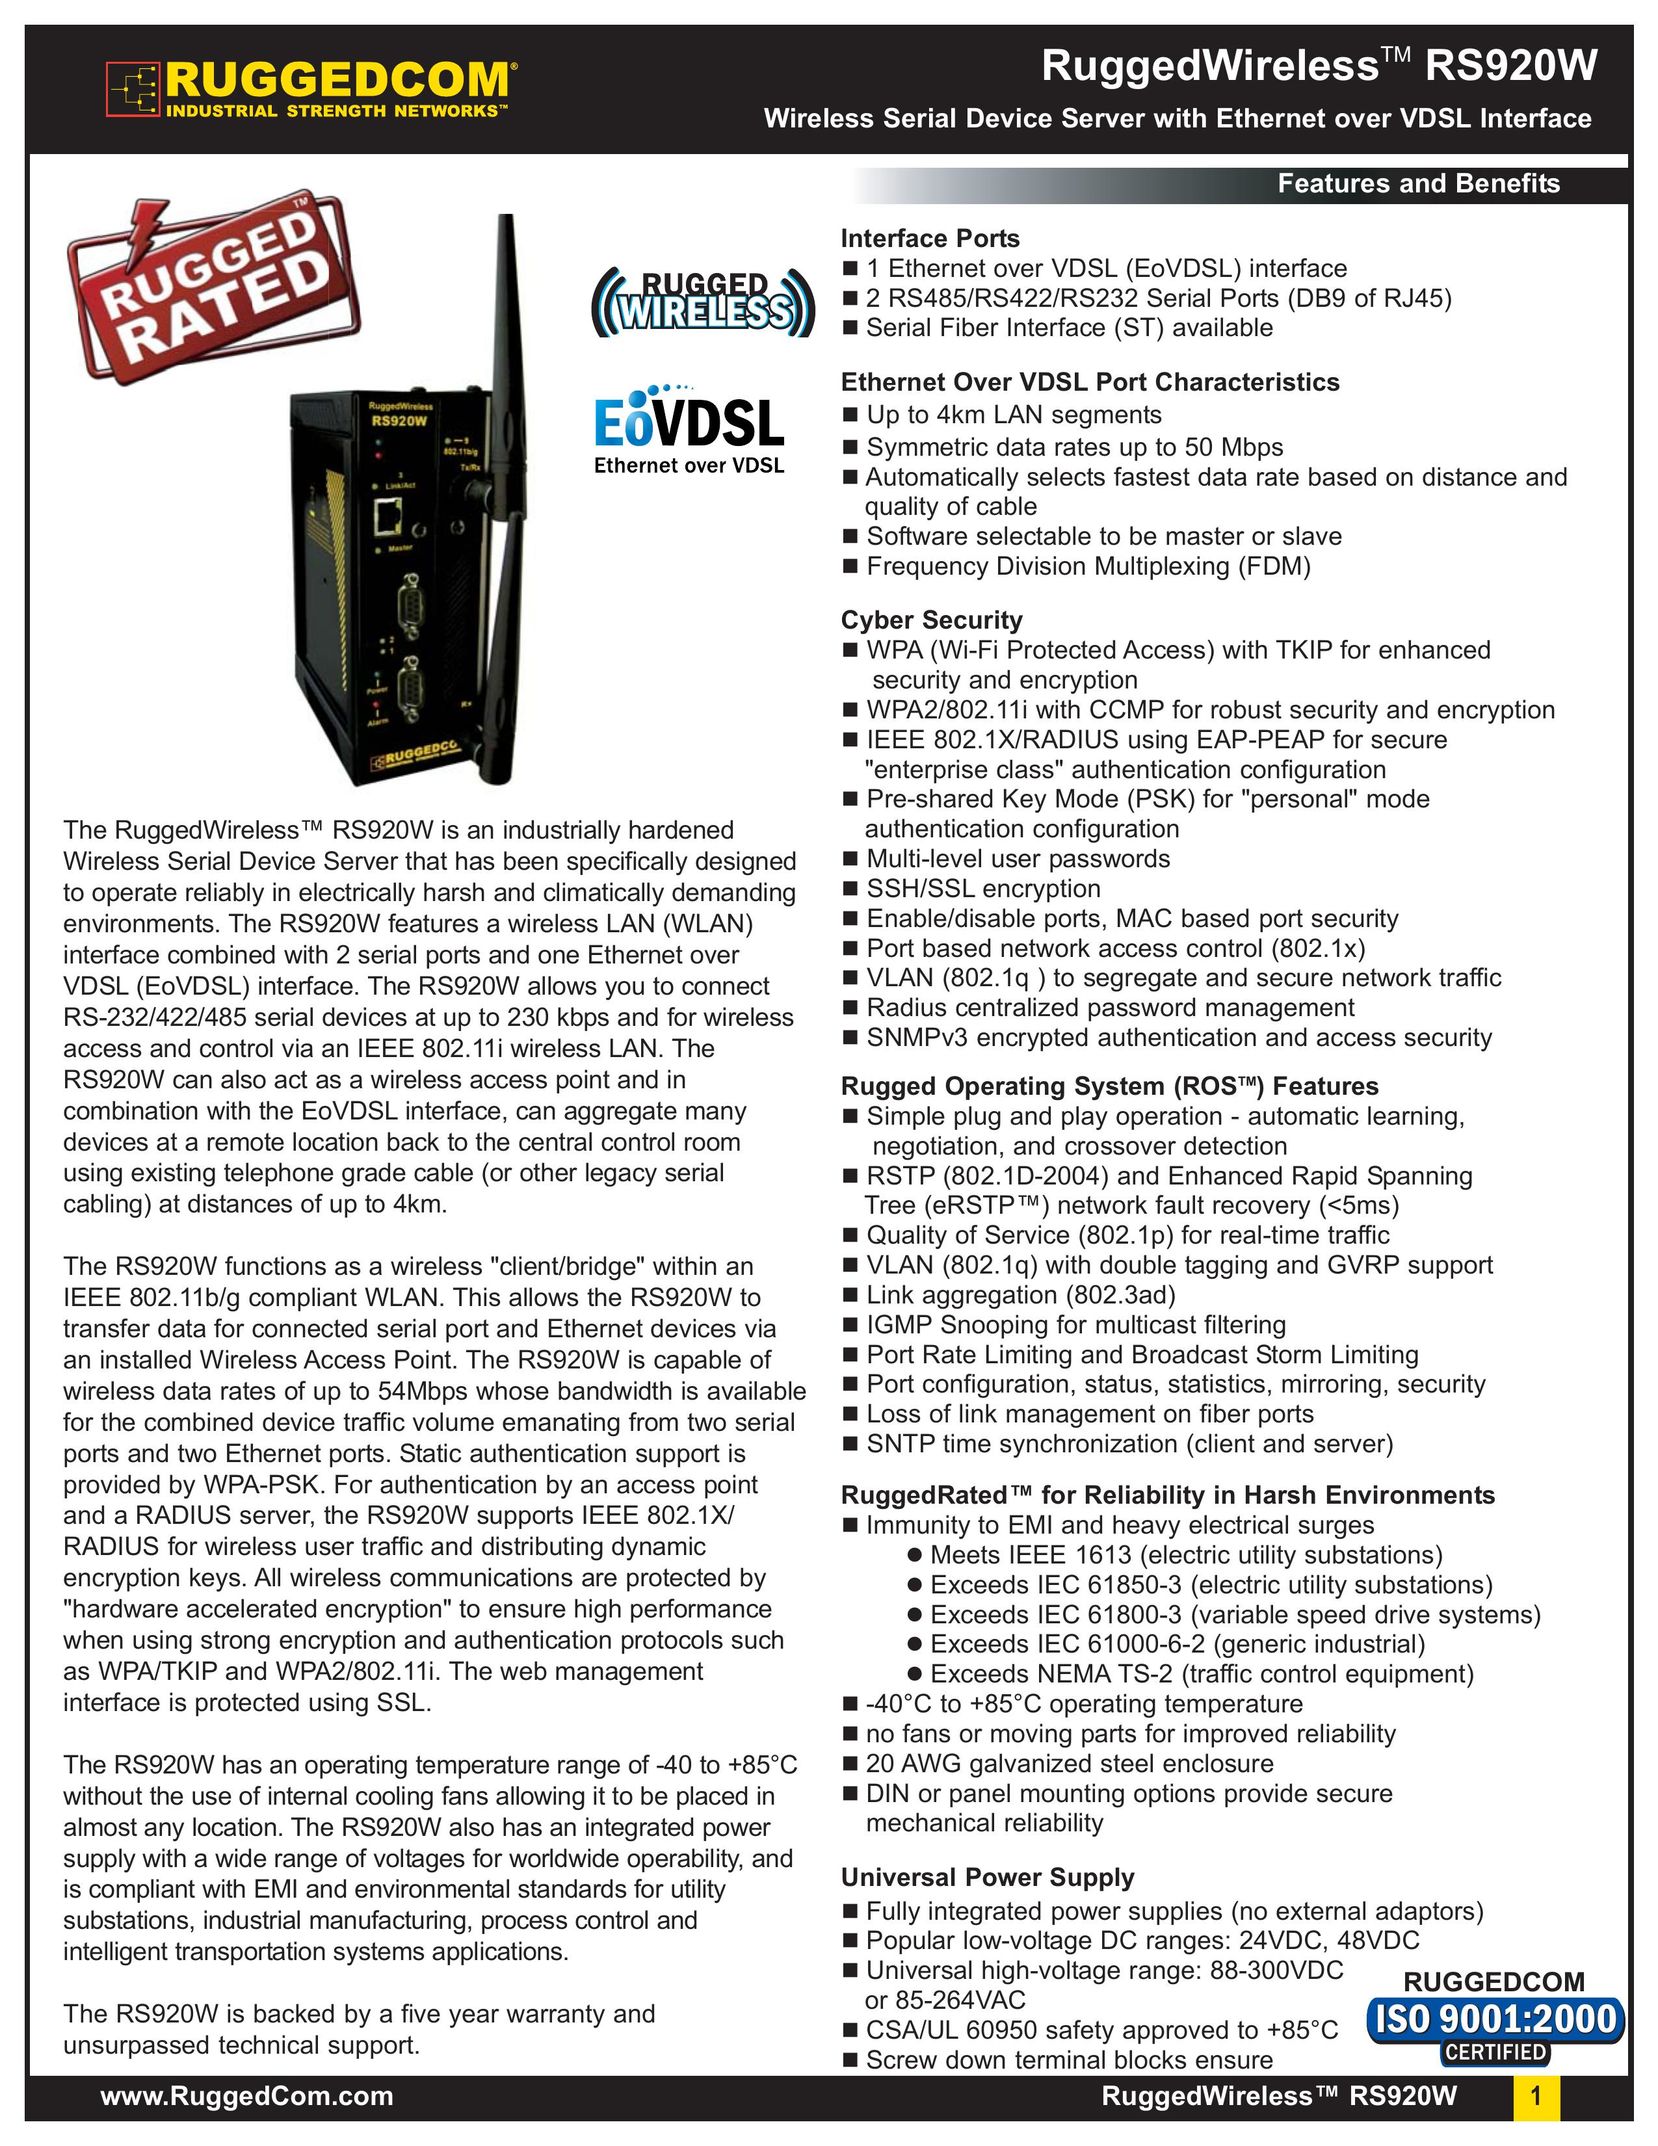 RuggedCom RS920W Switch User Manual